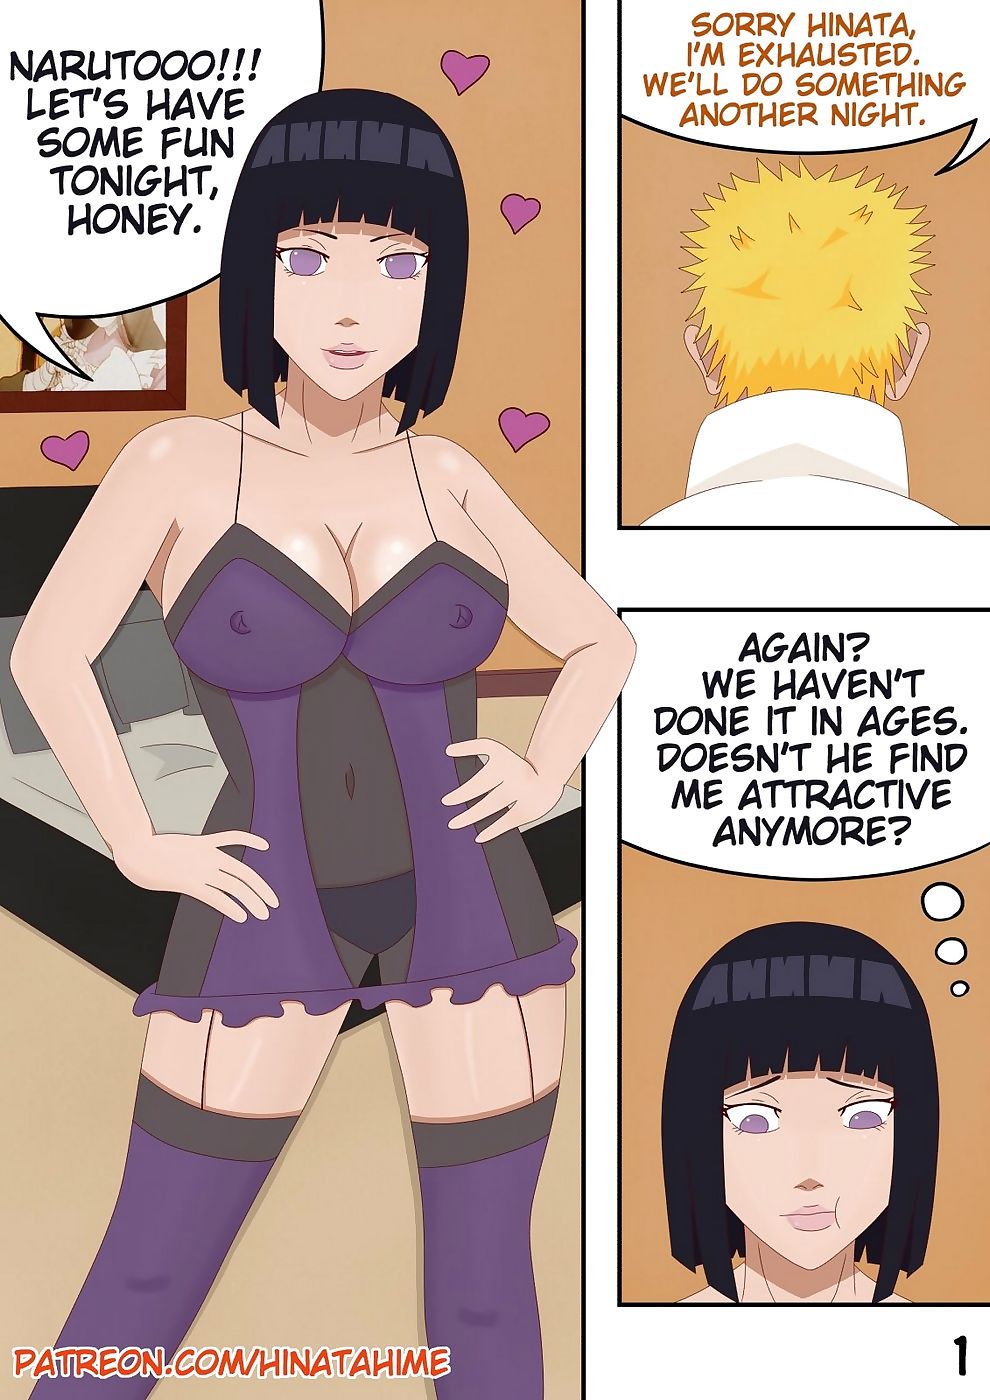 Naruto mulher swap nenhum jutsu page 1